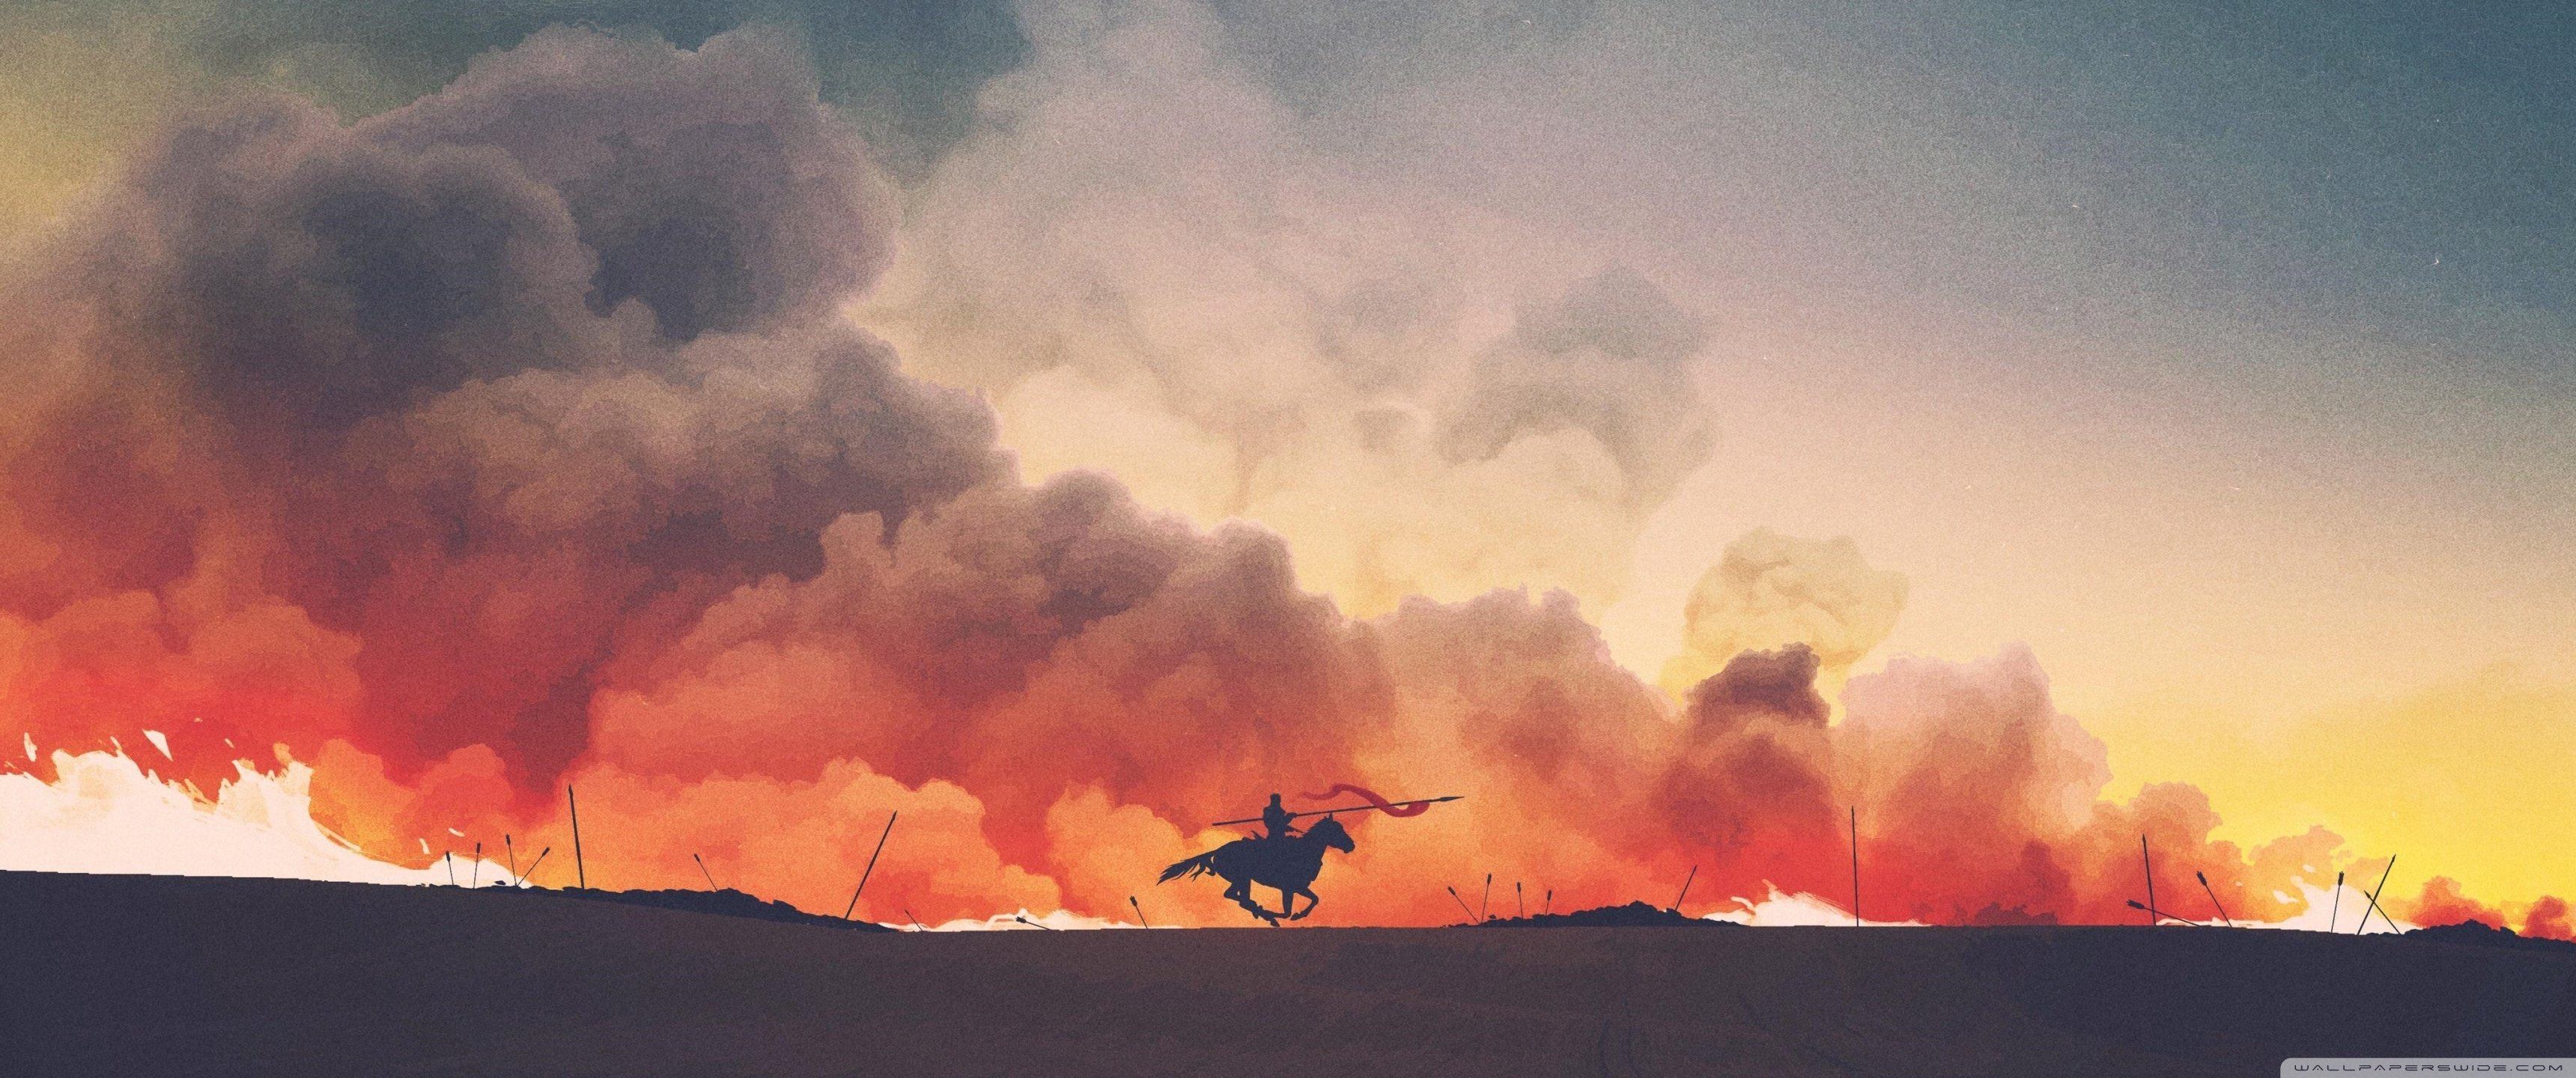 Last Man Standing Wallpaper - Game Of Thrones , HD Wallpaper & Backgrounds